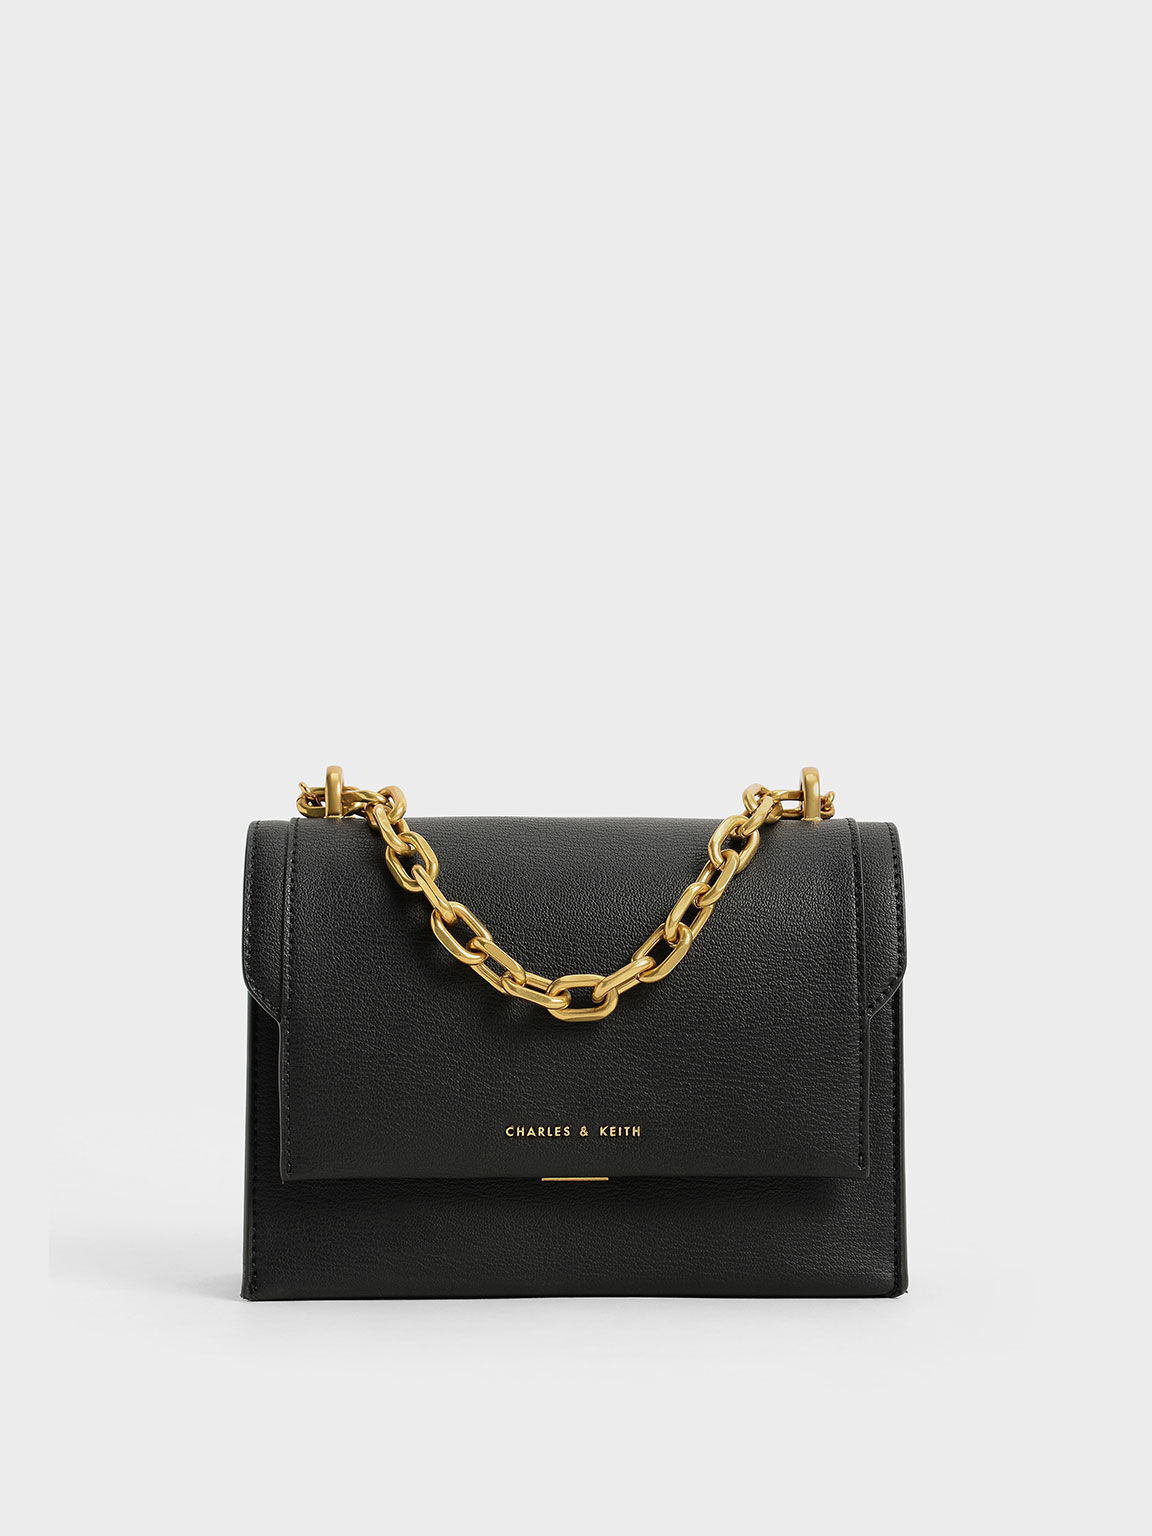 Chain Crossbody Handbag W/Matching Wallet